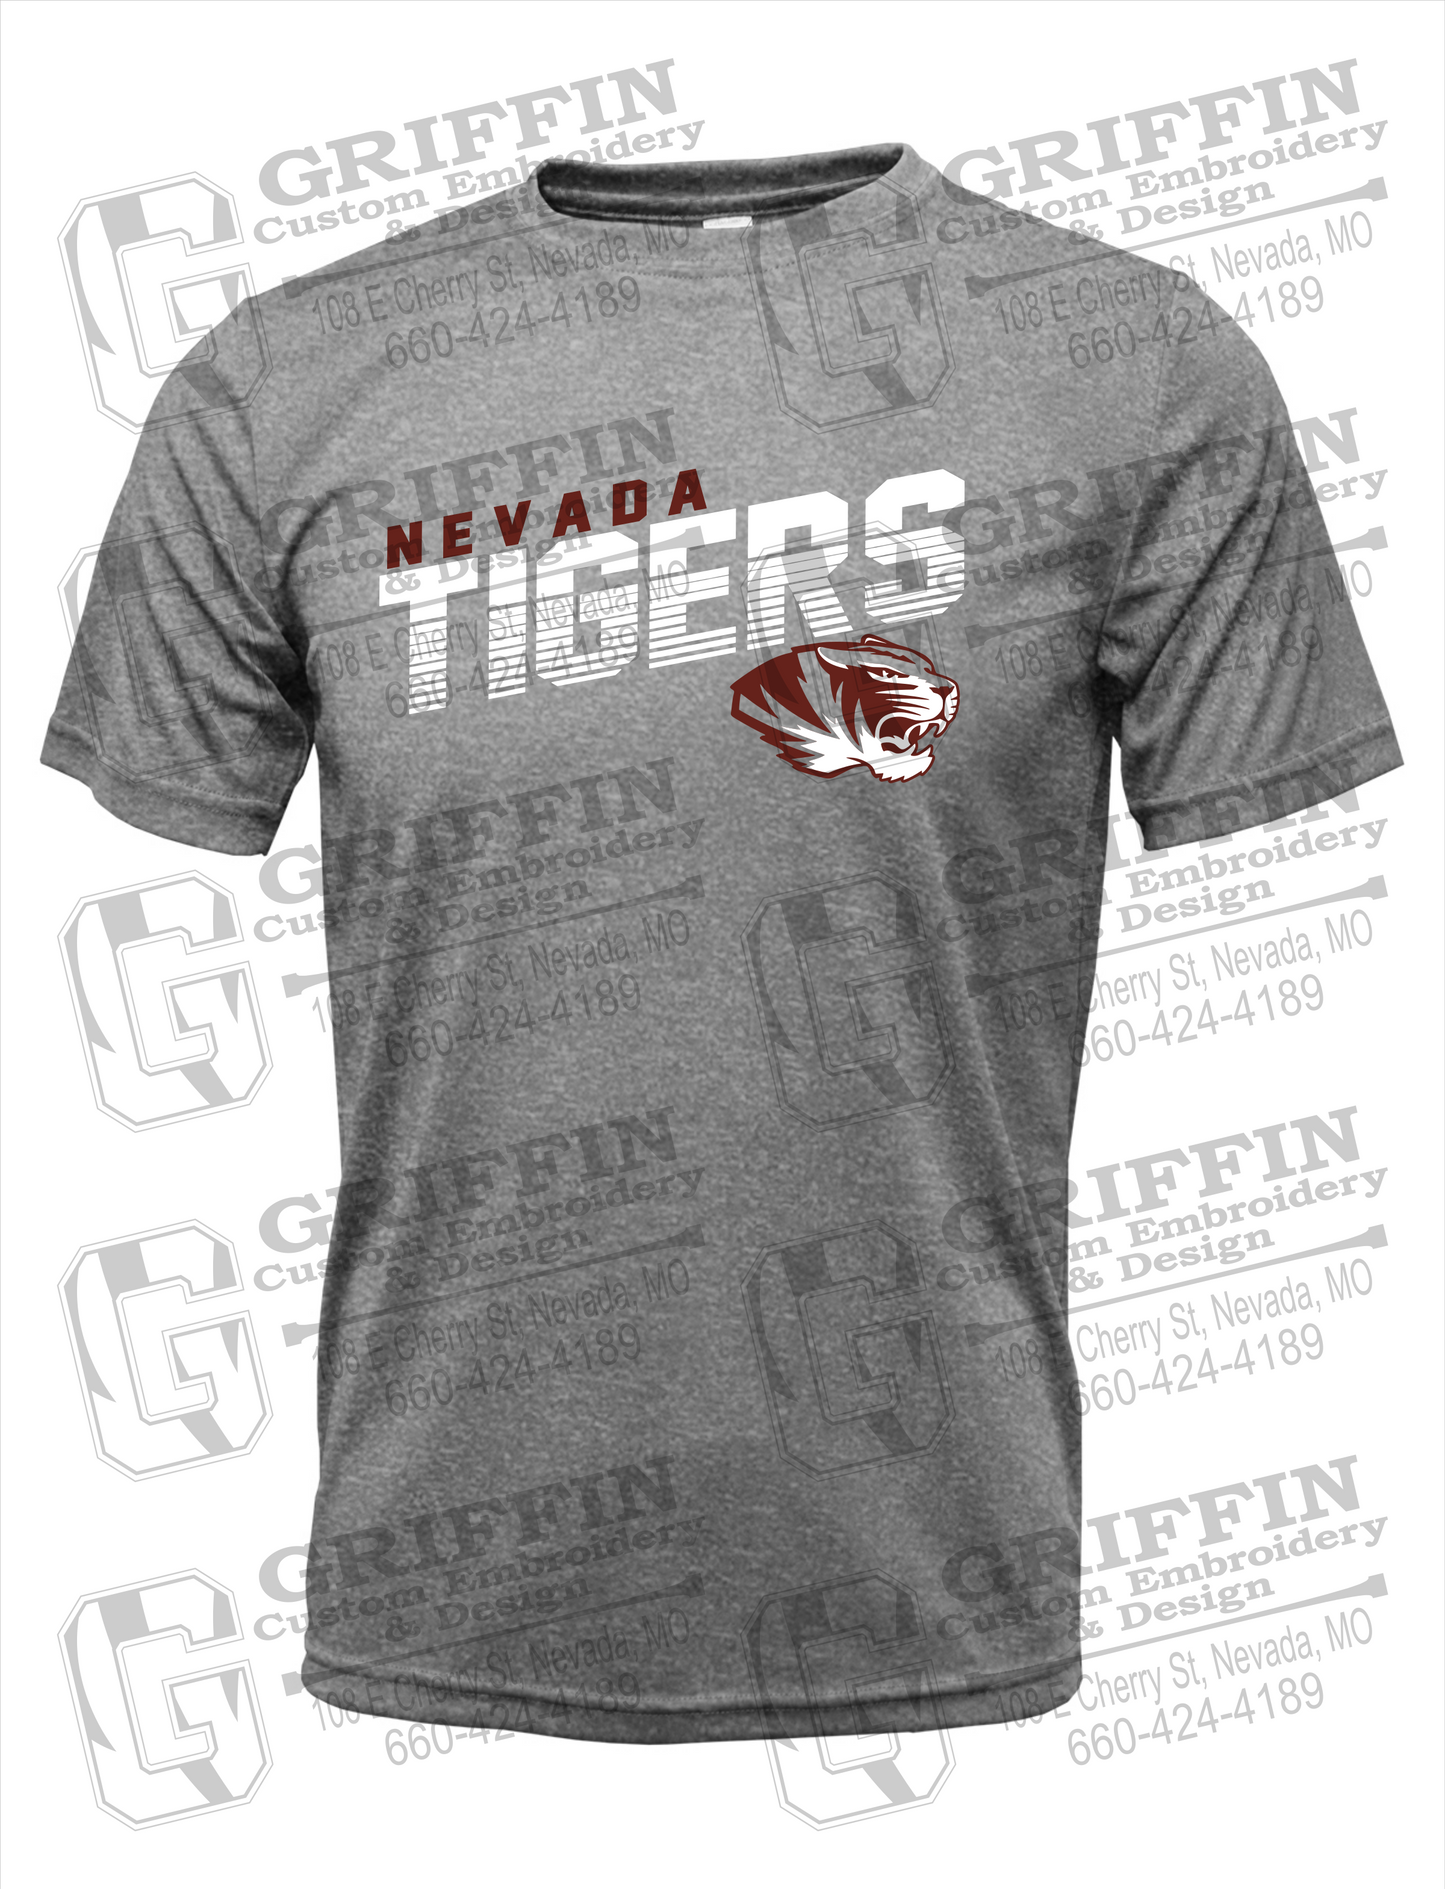 Nevada Tigers 19-A Dry-Fit T-Shirt